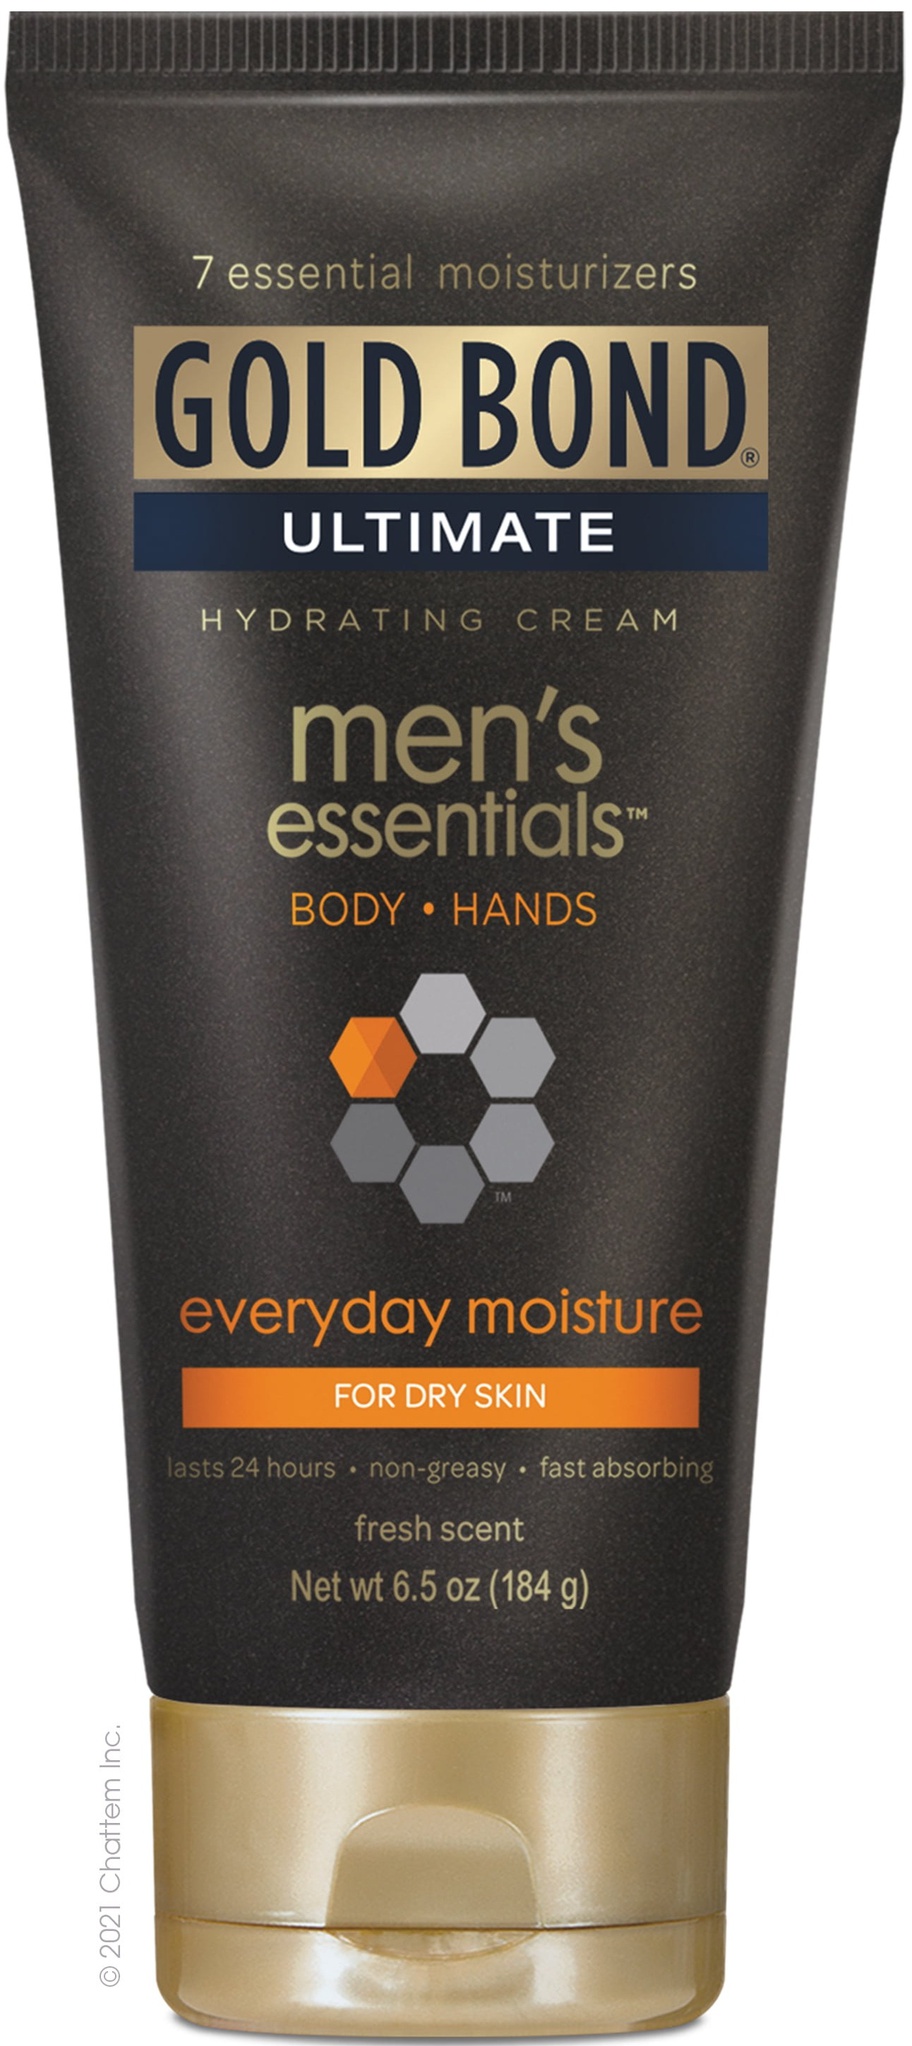 Gold Bond Ultimate Men's Essentials Everyday Hydrating Cream